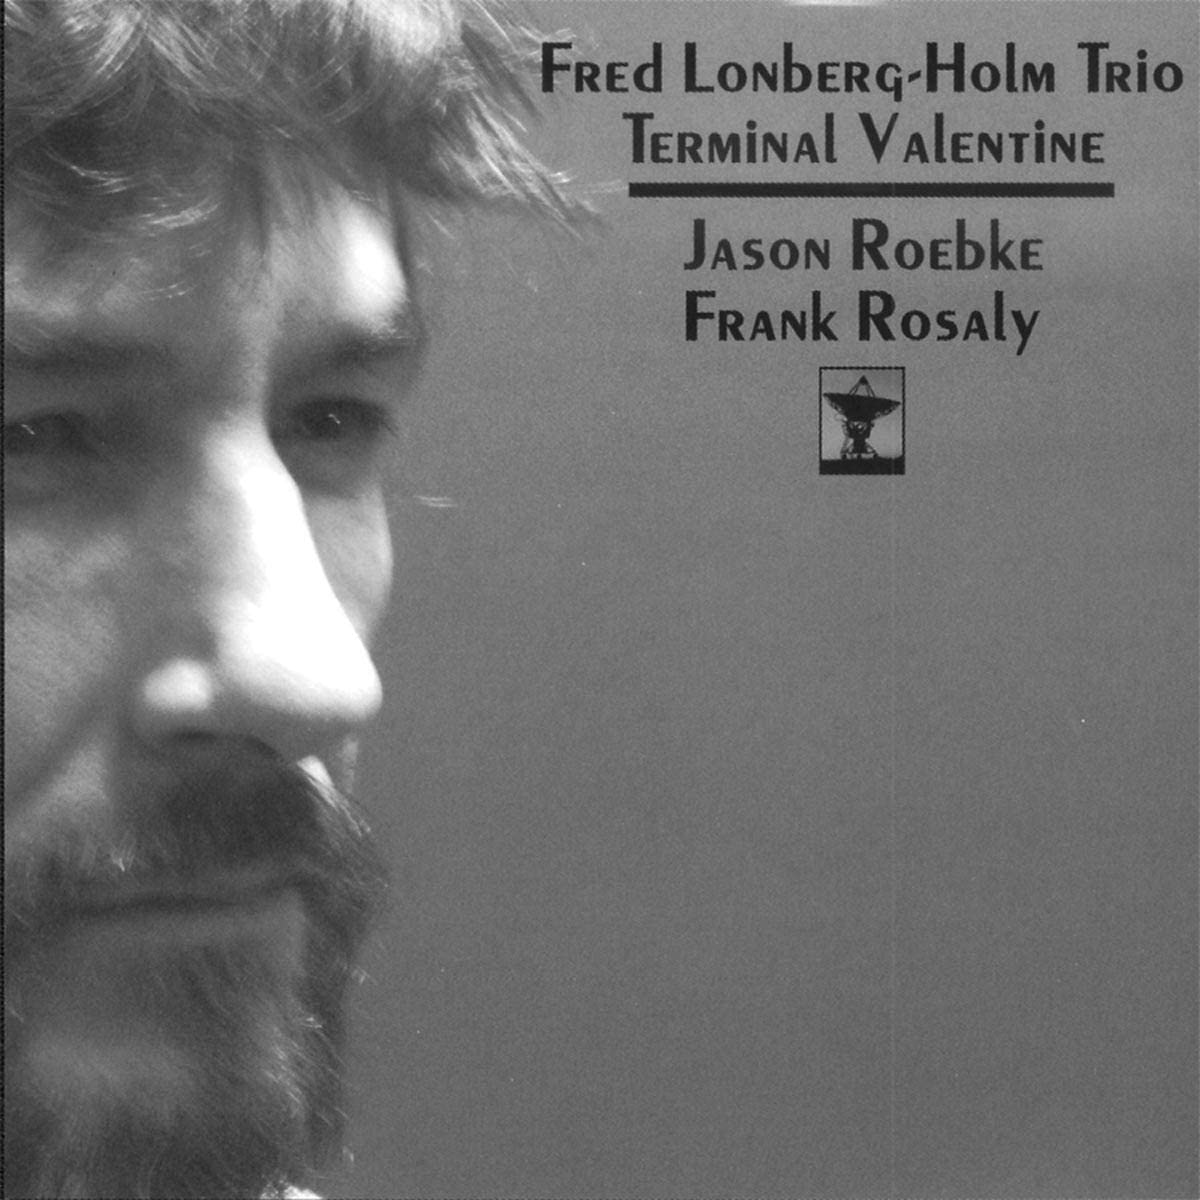 Fred Lonberg-Holm Trio - Terminal Valentine - CD